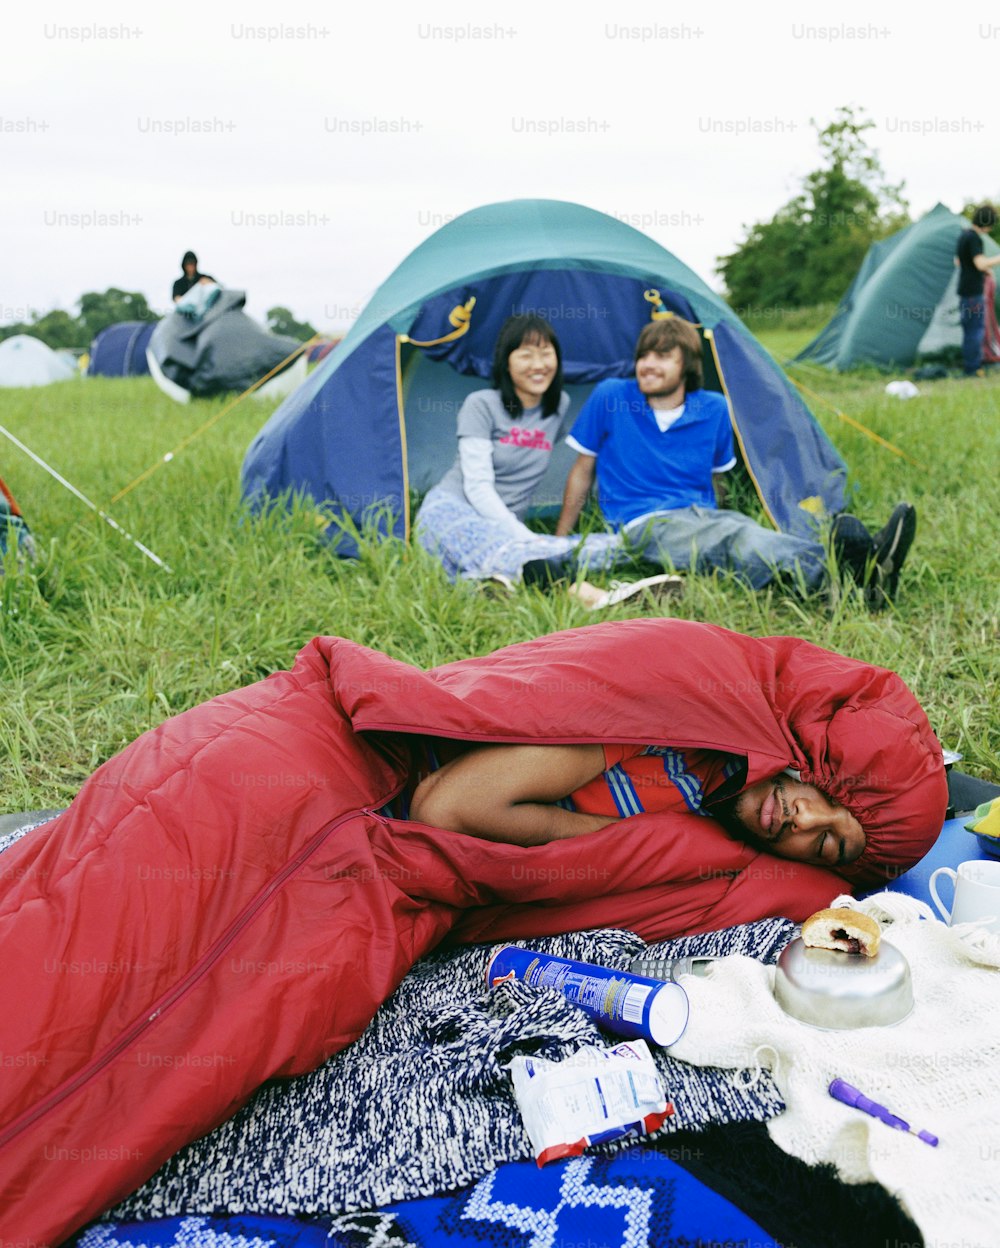 a man sleeping in a sleeping bag in a field